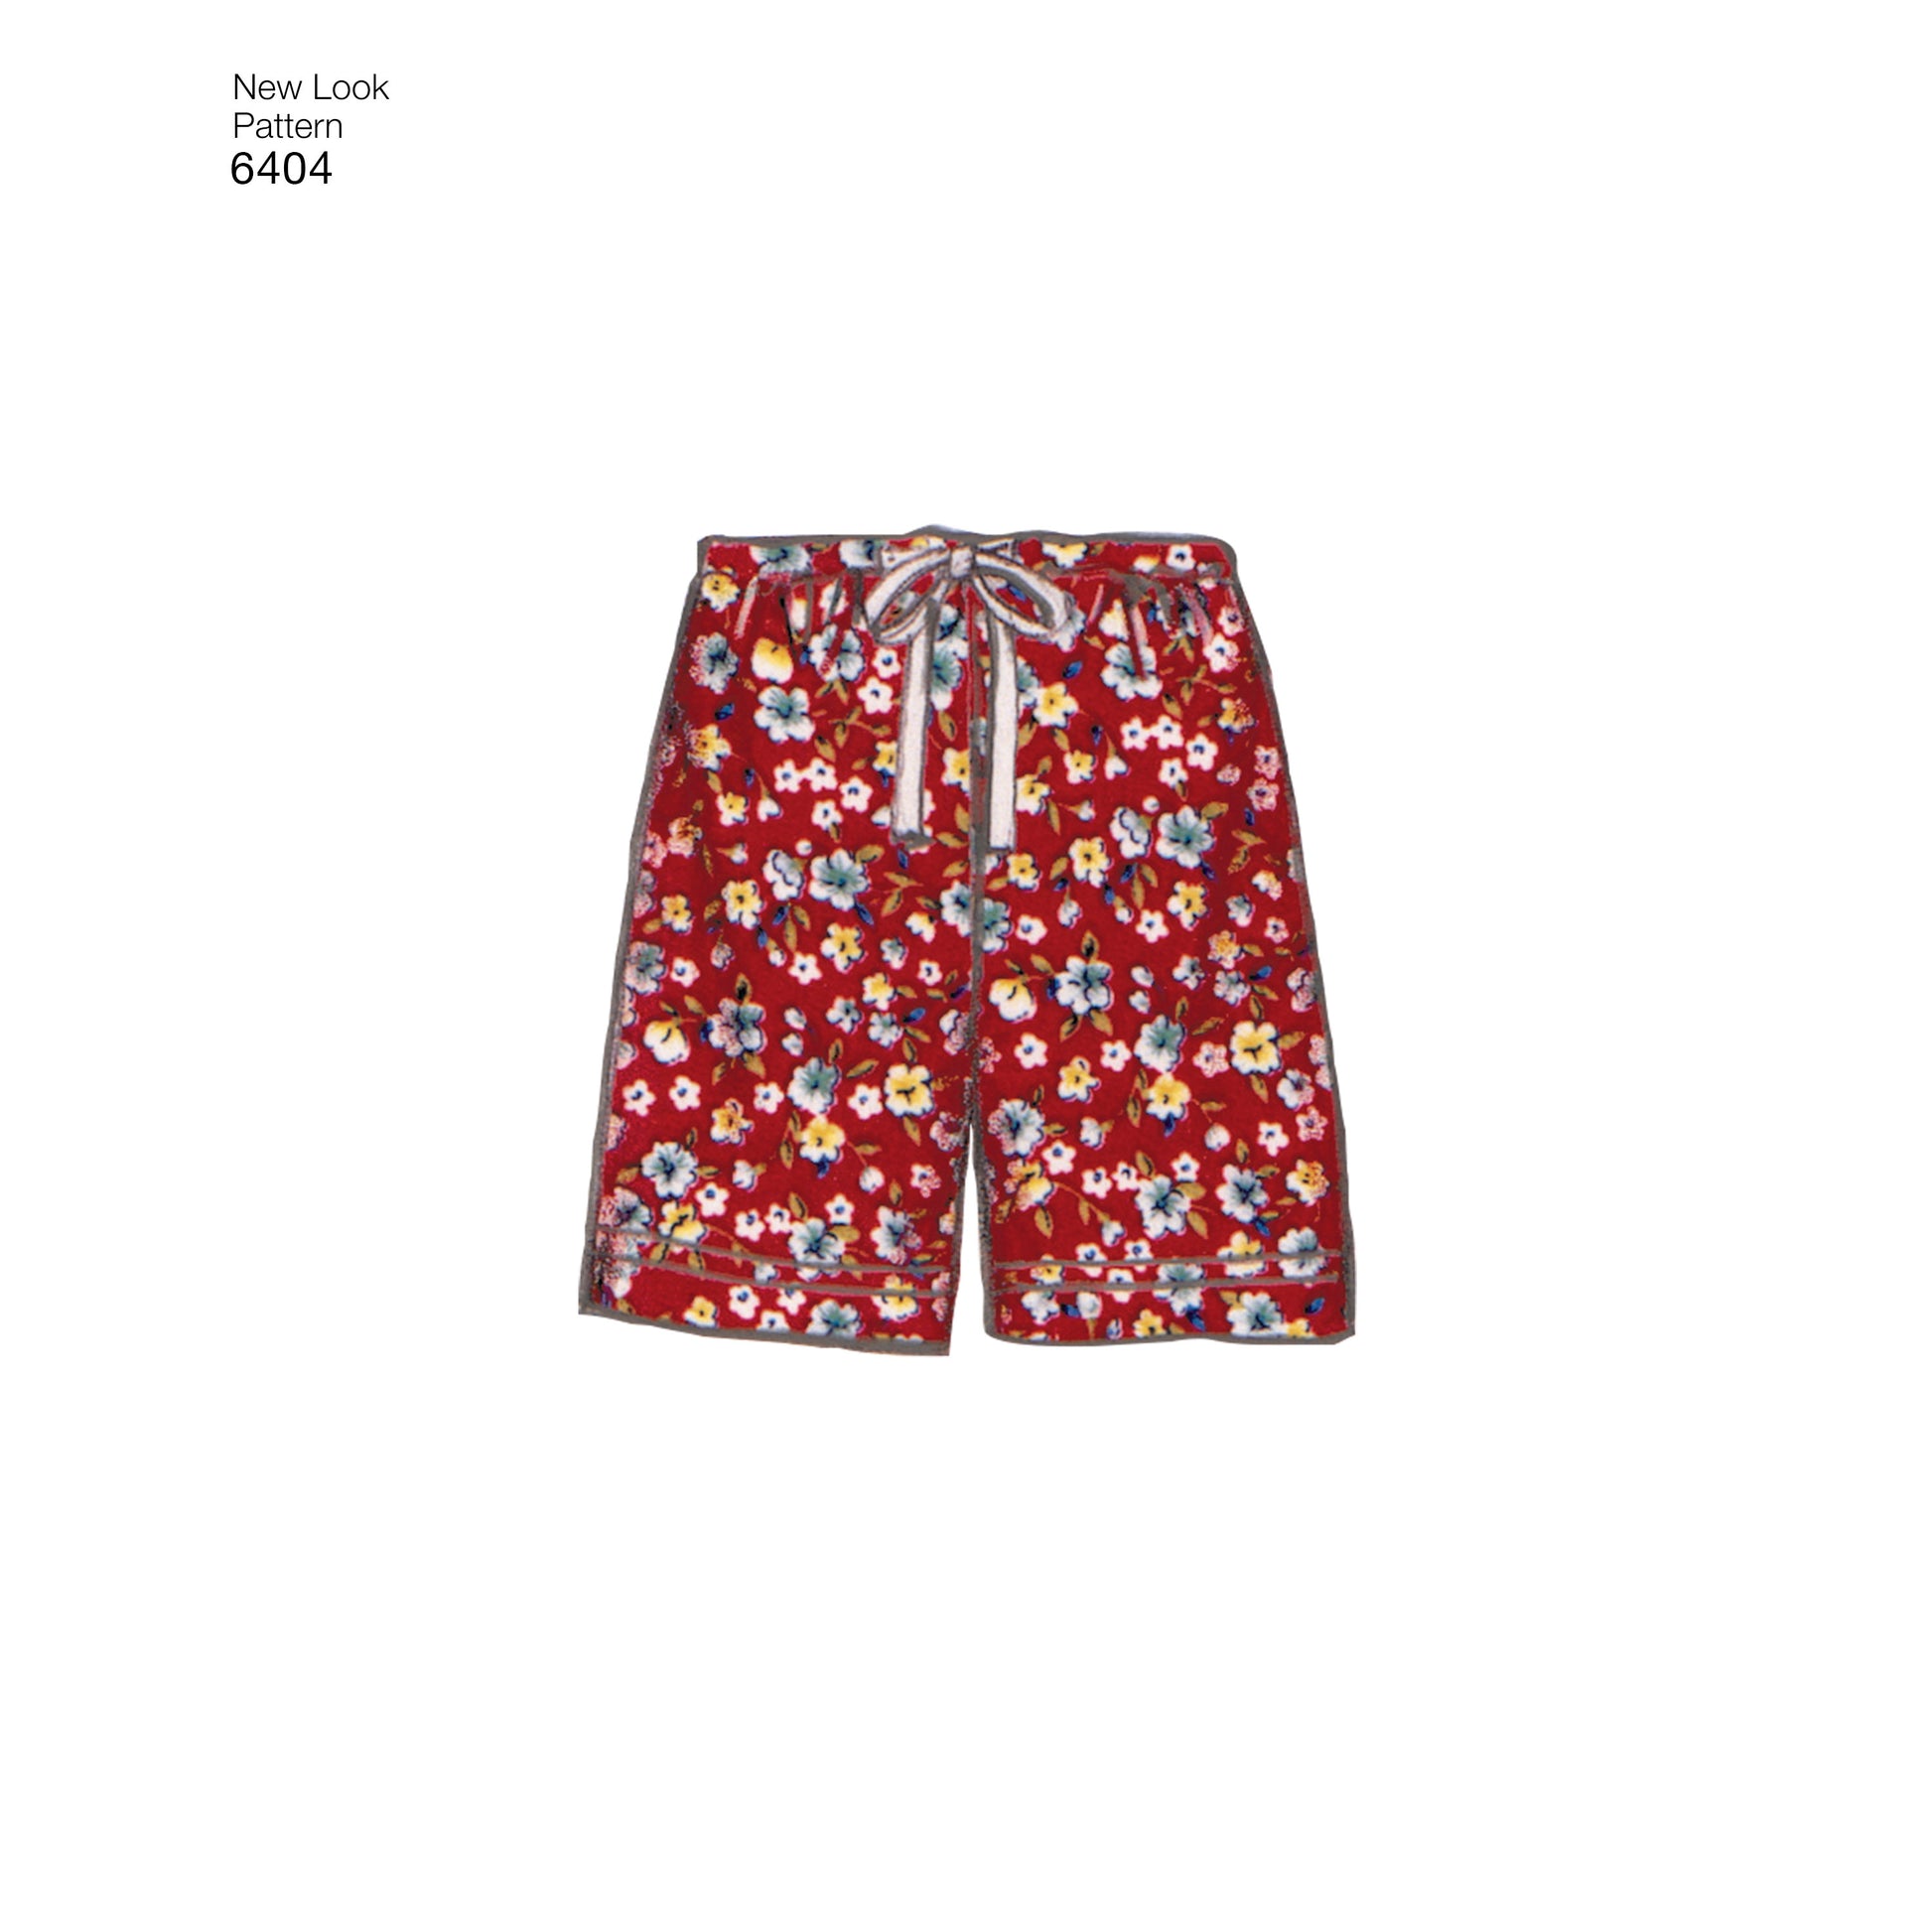 Symönster New Look 6404 - Top Byxa Skjorta Pyjamas - Dam Herr | Bild 2